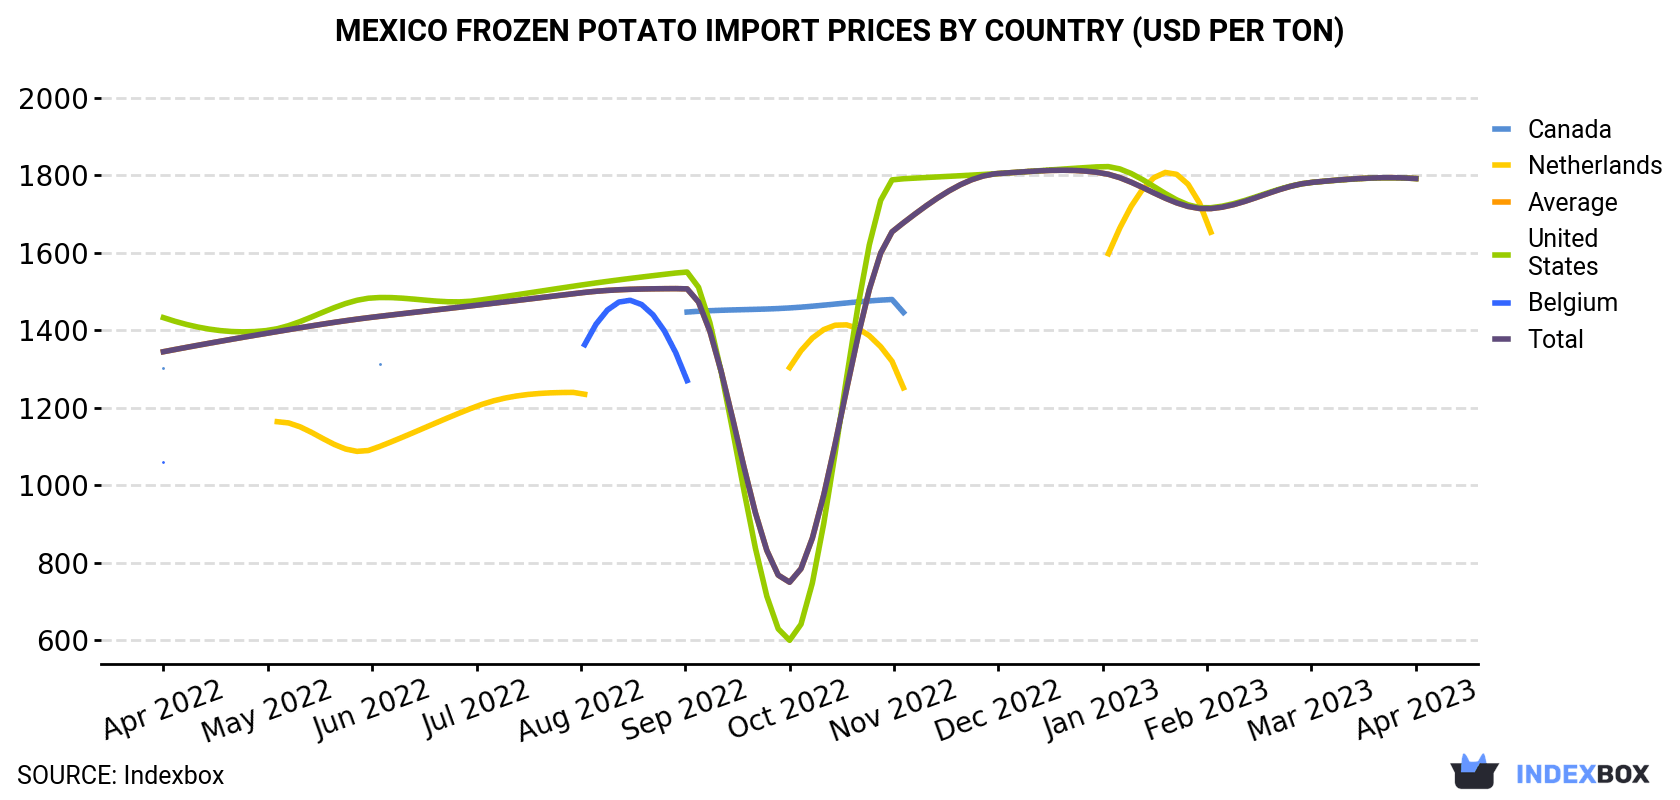 Mexico Frozen Potato Import Prices By Country (USD Per Ton)